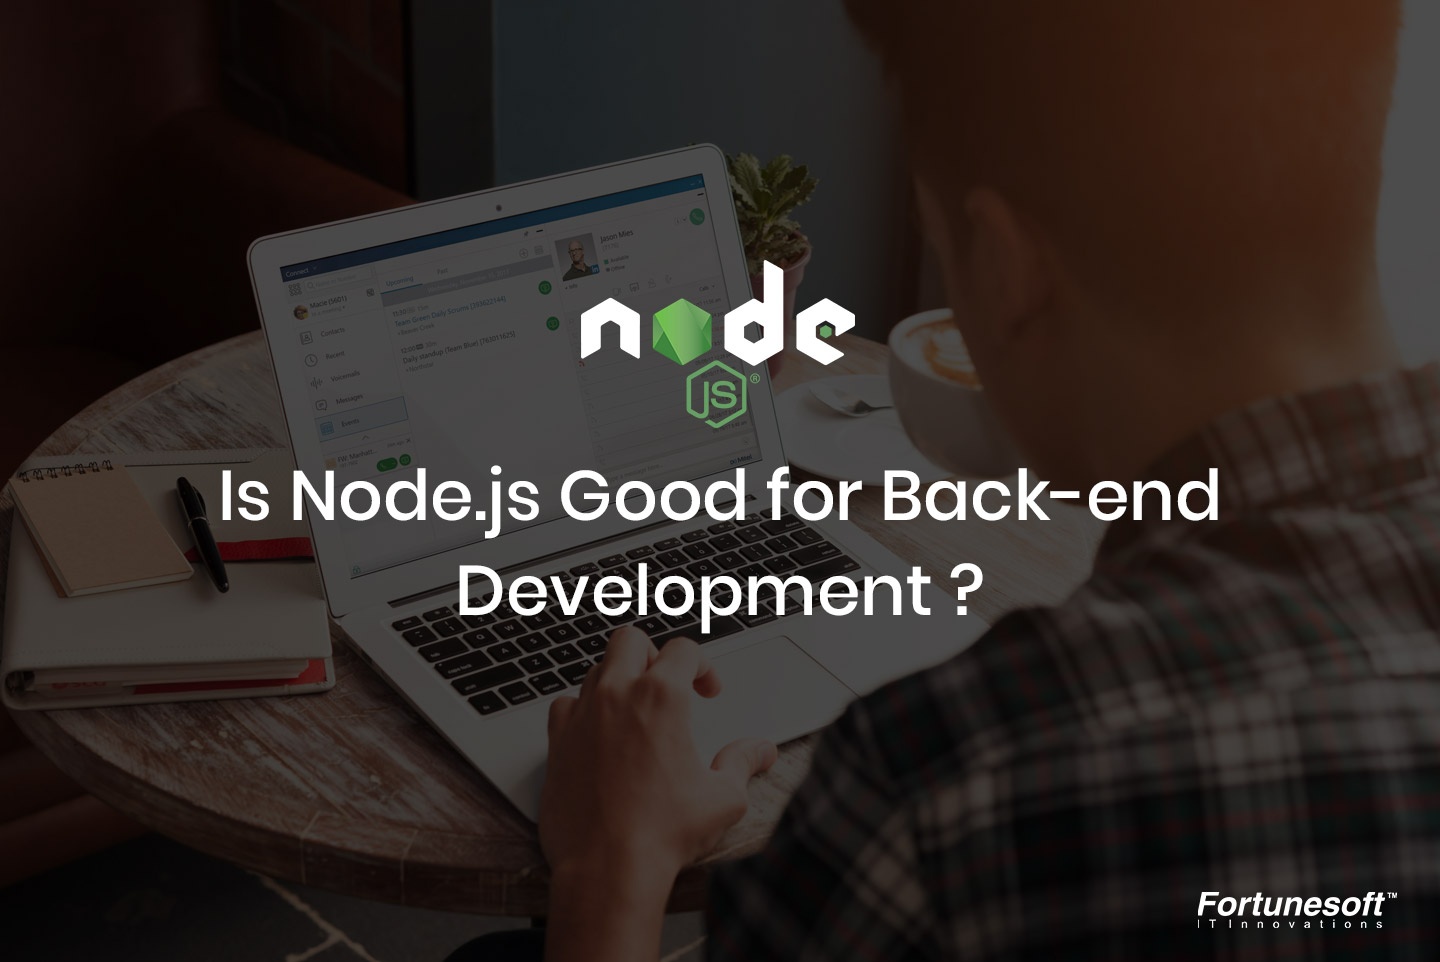 Fortunesoft IT Innovations, Inc. Prestashop News: Why Node.js is preferred for Backend Development